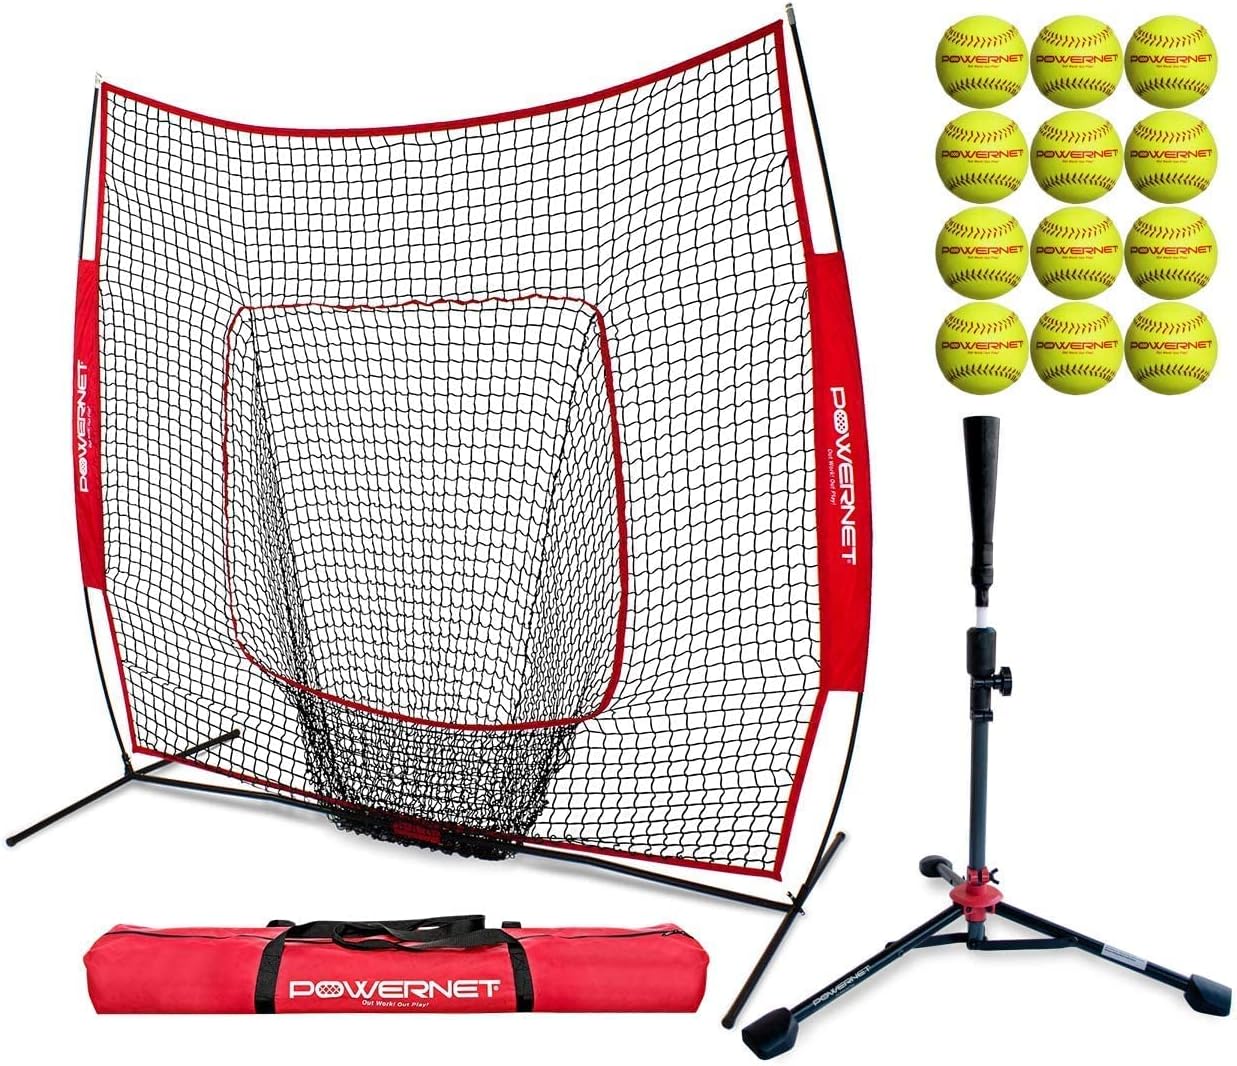 PowerNet Baseball Softball Practice Net 7x7 with Travel Tee and 12 Pack Softballs Bundle | Practice Hitting, Pitching, Batting, Fielding | Training Equipment Gear